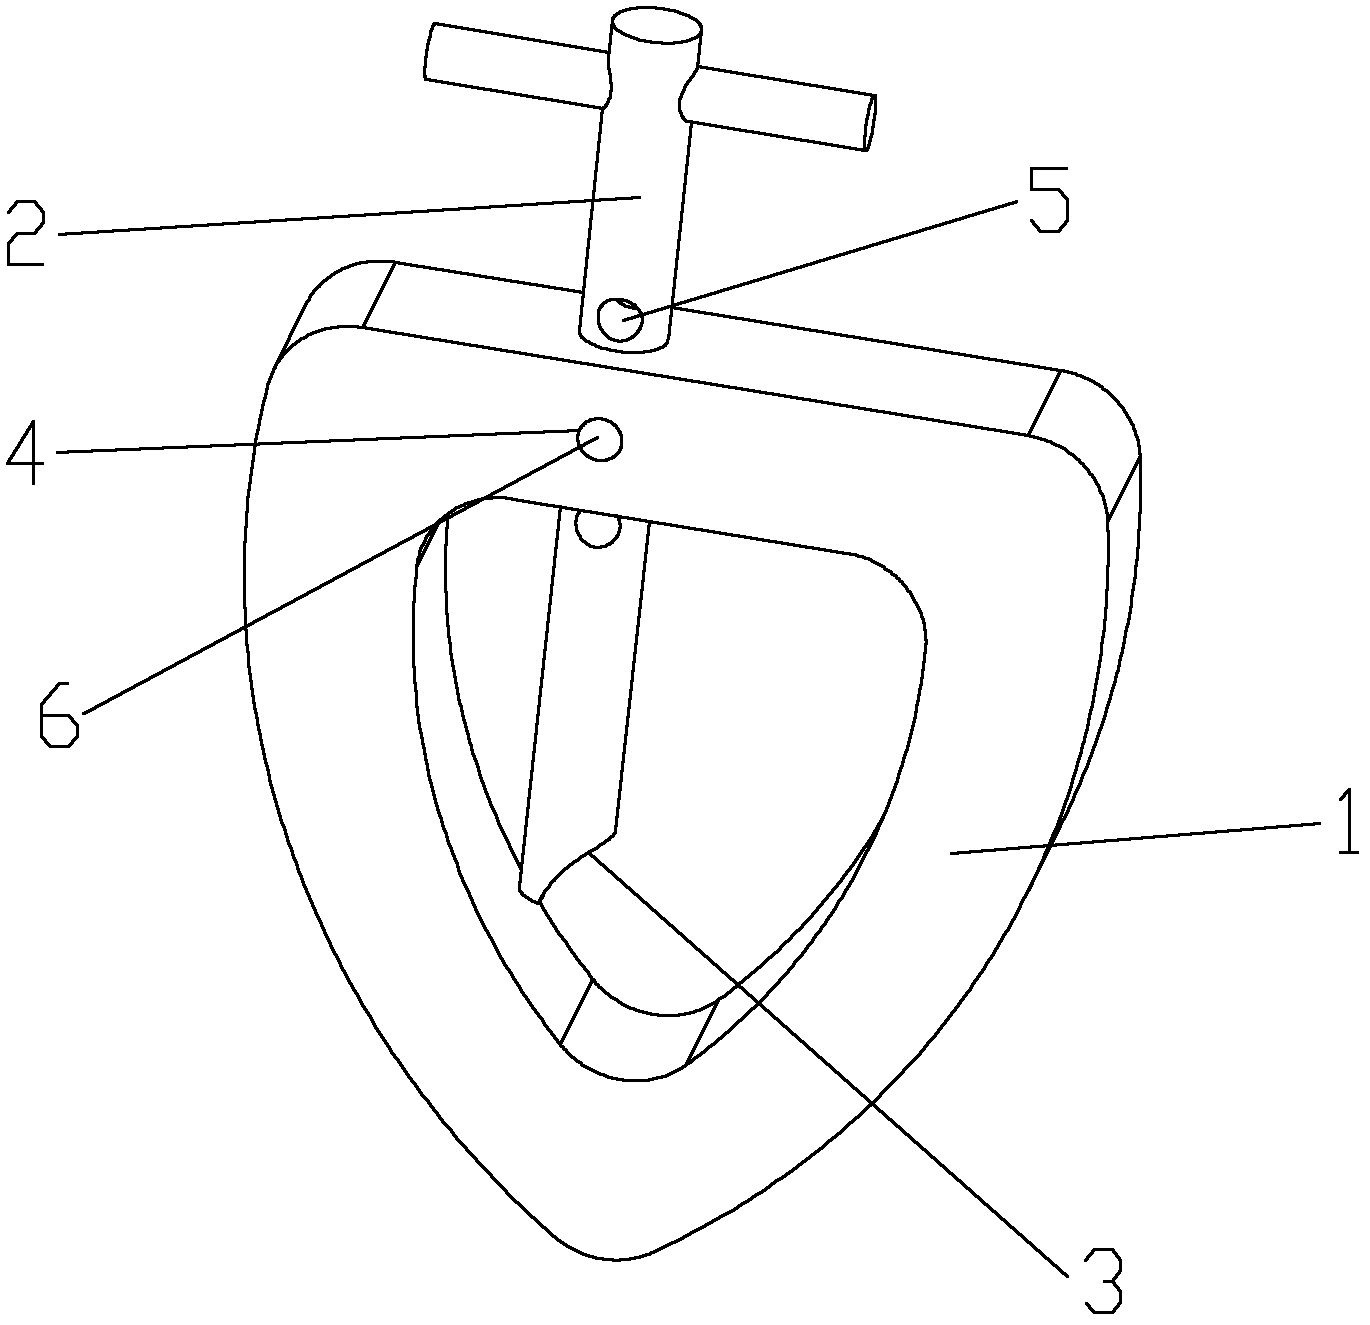 Heart-shaped fixture